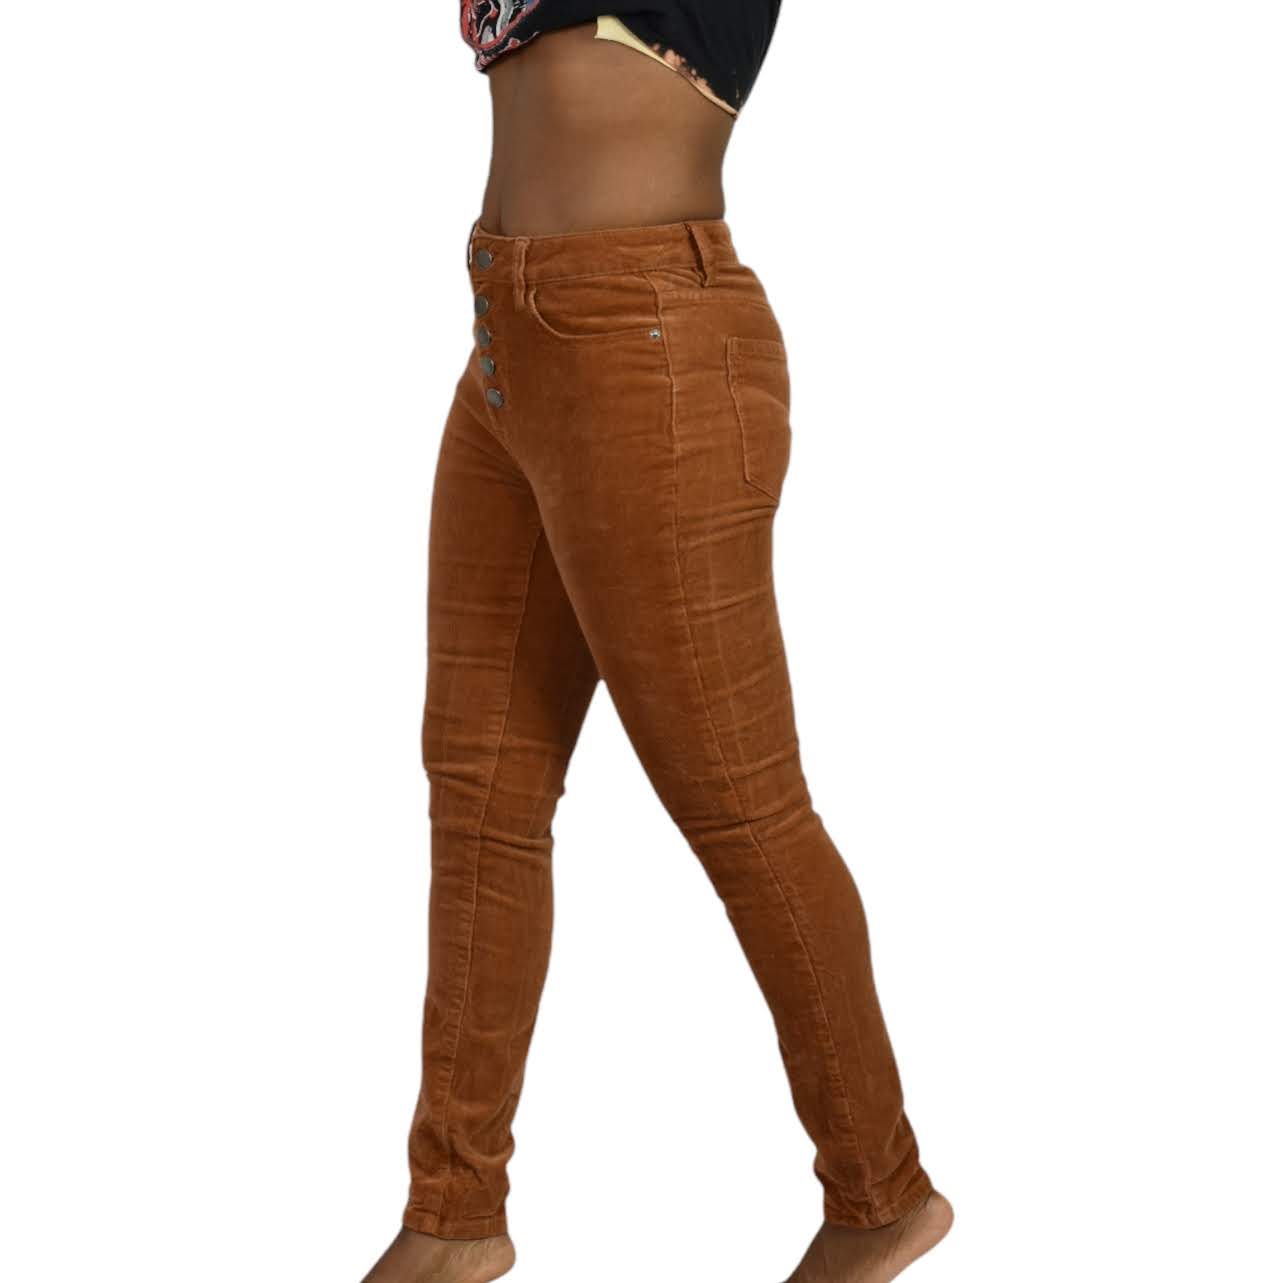 I&M Ariana Corduroy Pants Size 5